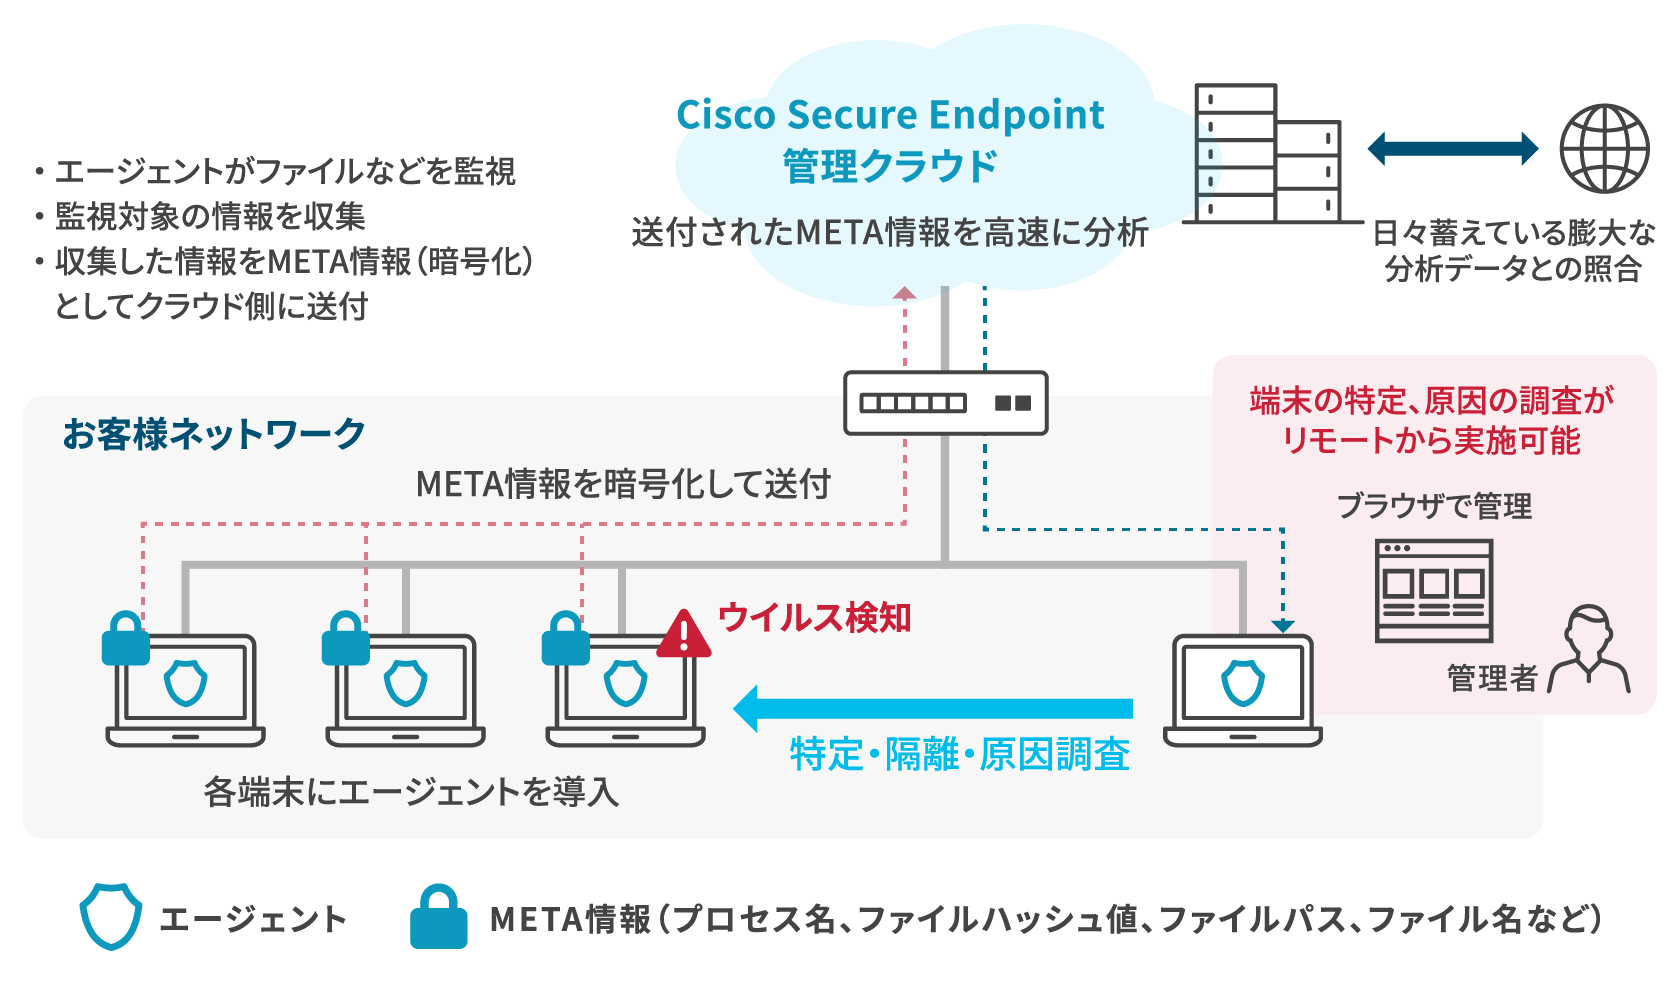 Cisco Secure Endpointクラウドは、日々蓄えている膨大な分析データと照合し、お客様から送付されたMETA情報を高速に分析をしている。お客様ネットワークではエージェントがファイルなどを監視、監視対象の情報を収集、収集した情報をMETA情報(暗号化)としてクラウド側に送付。管理者はブラウザで管理可能で、端末の特定、原因の調査がリモートから実施可能。